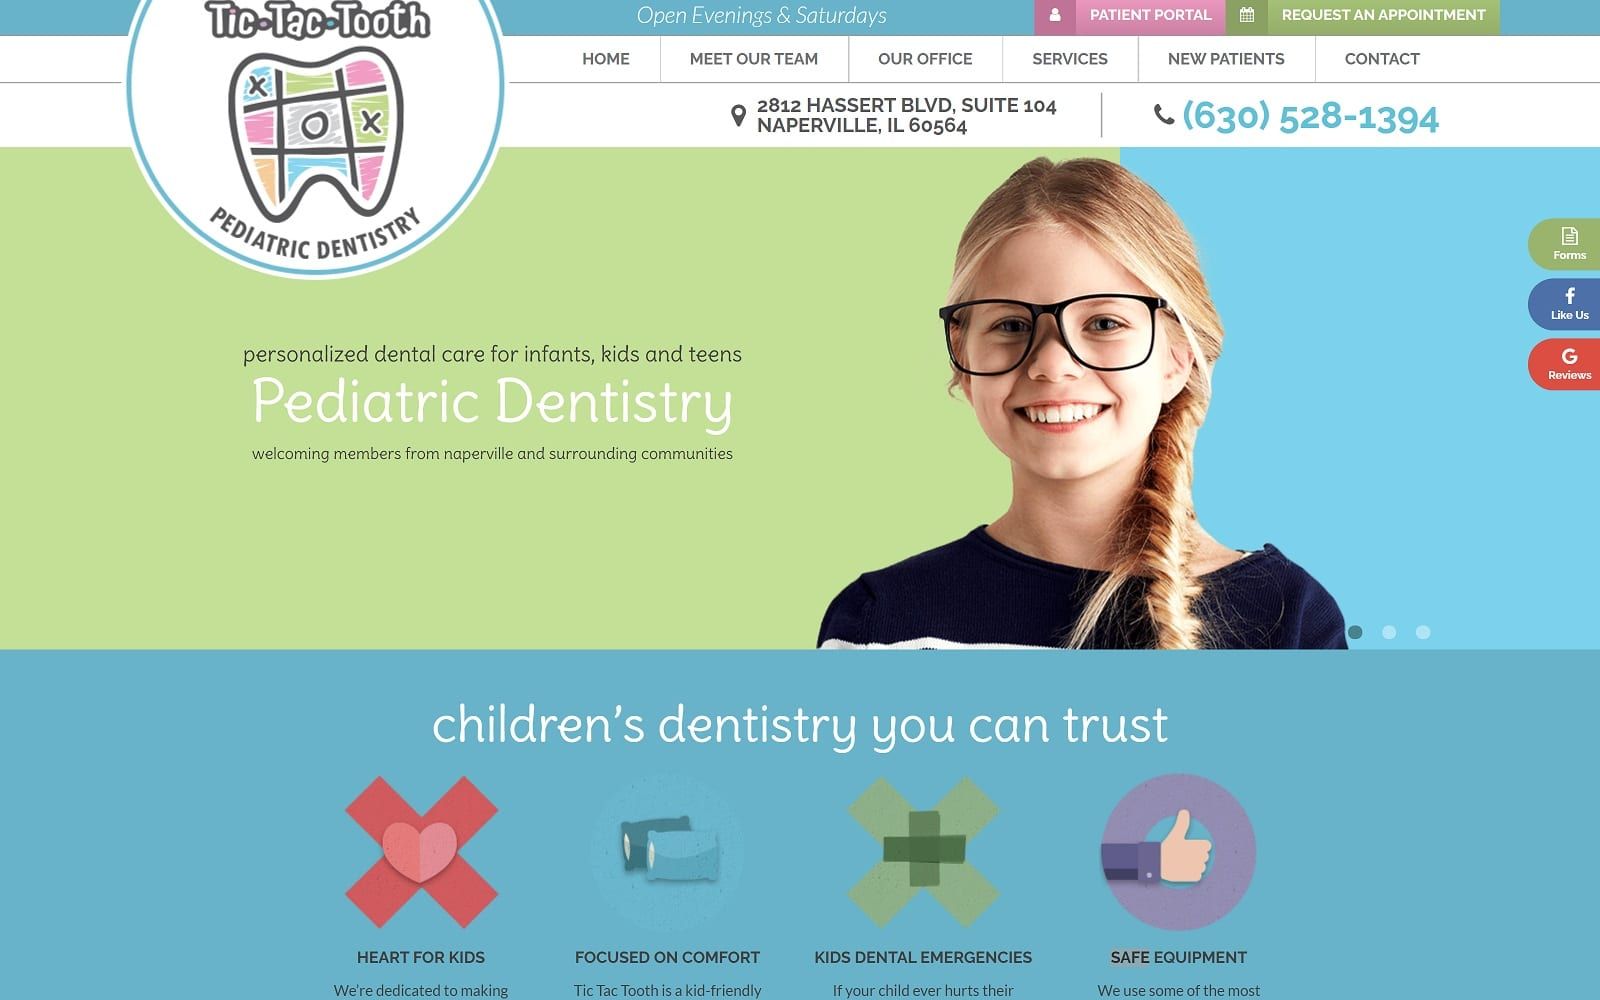 The screenshot of tic tac tooth pediatric dentistry tictactooth. Com website